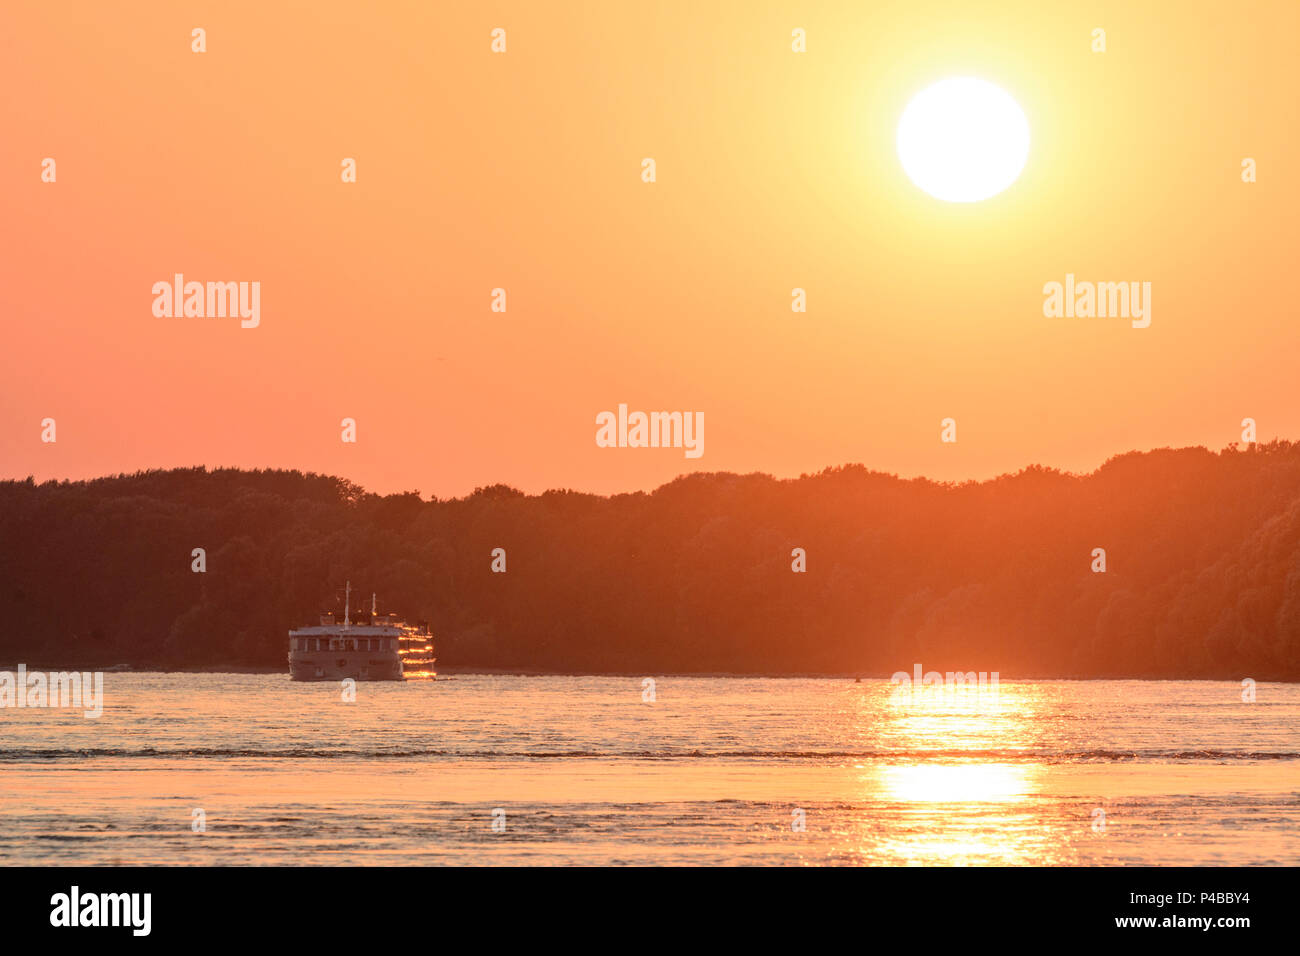 Nationalpark Donauauen, Danube-Auen National Park, Danube, sun, sunset, cruise ship, Donau, Lower Austria, Austria Stock Photo